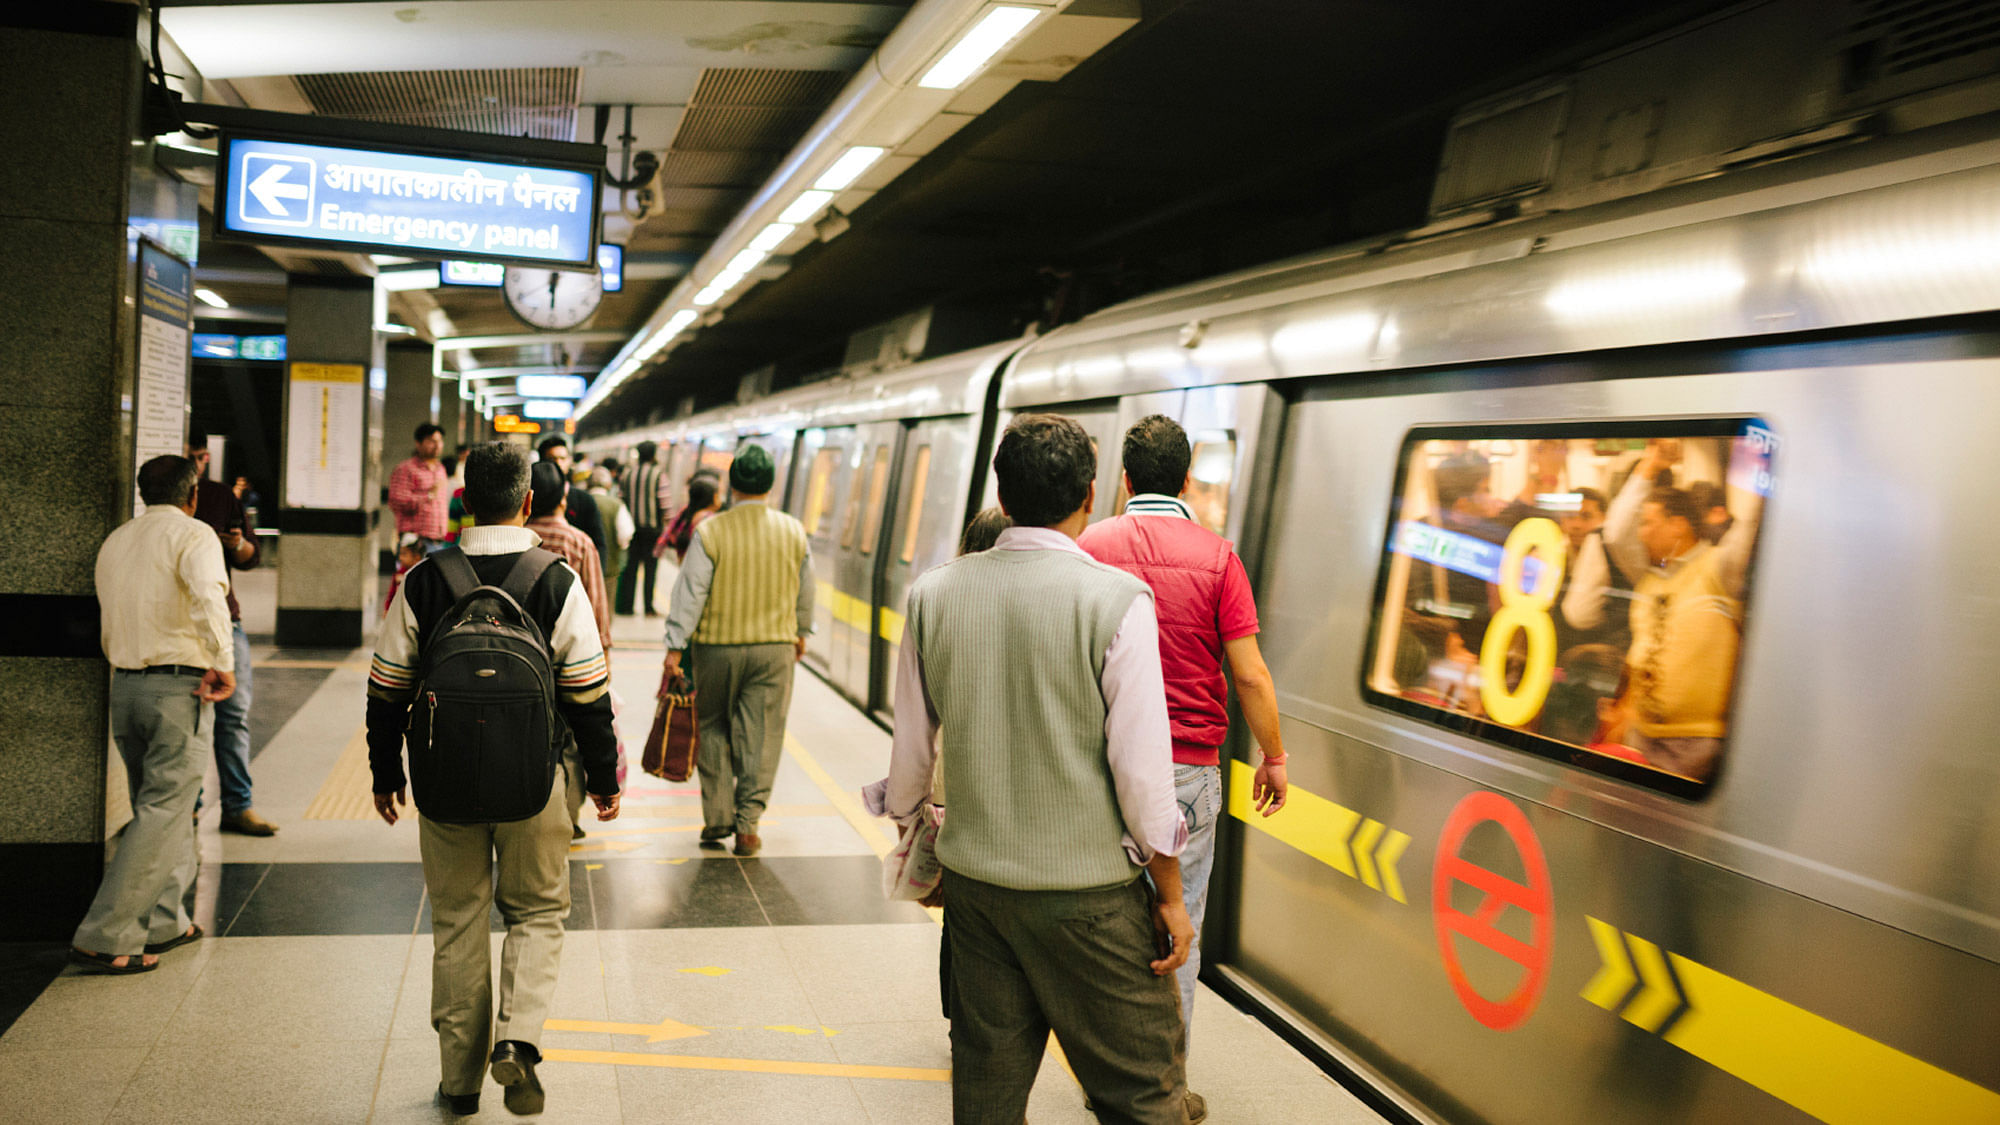 The Delhi Metro fares were increased in May 2016.